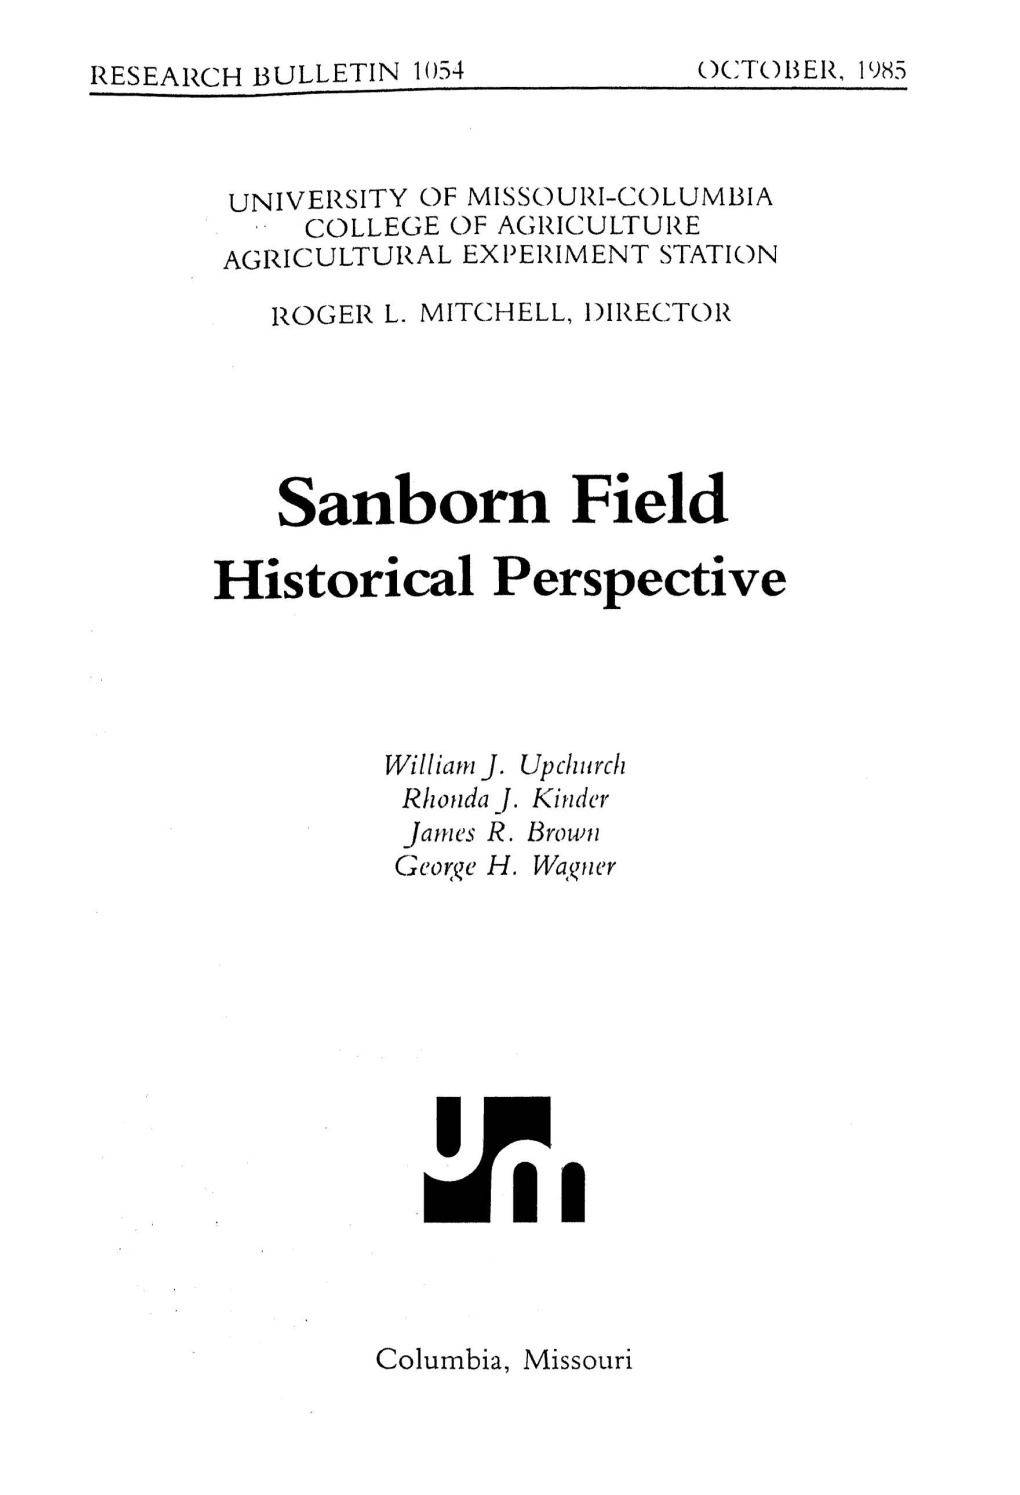 Sanborn Field Historical Perspective